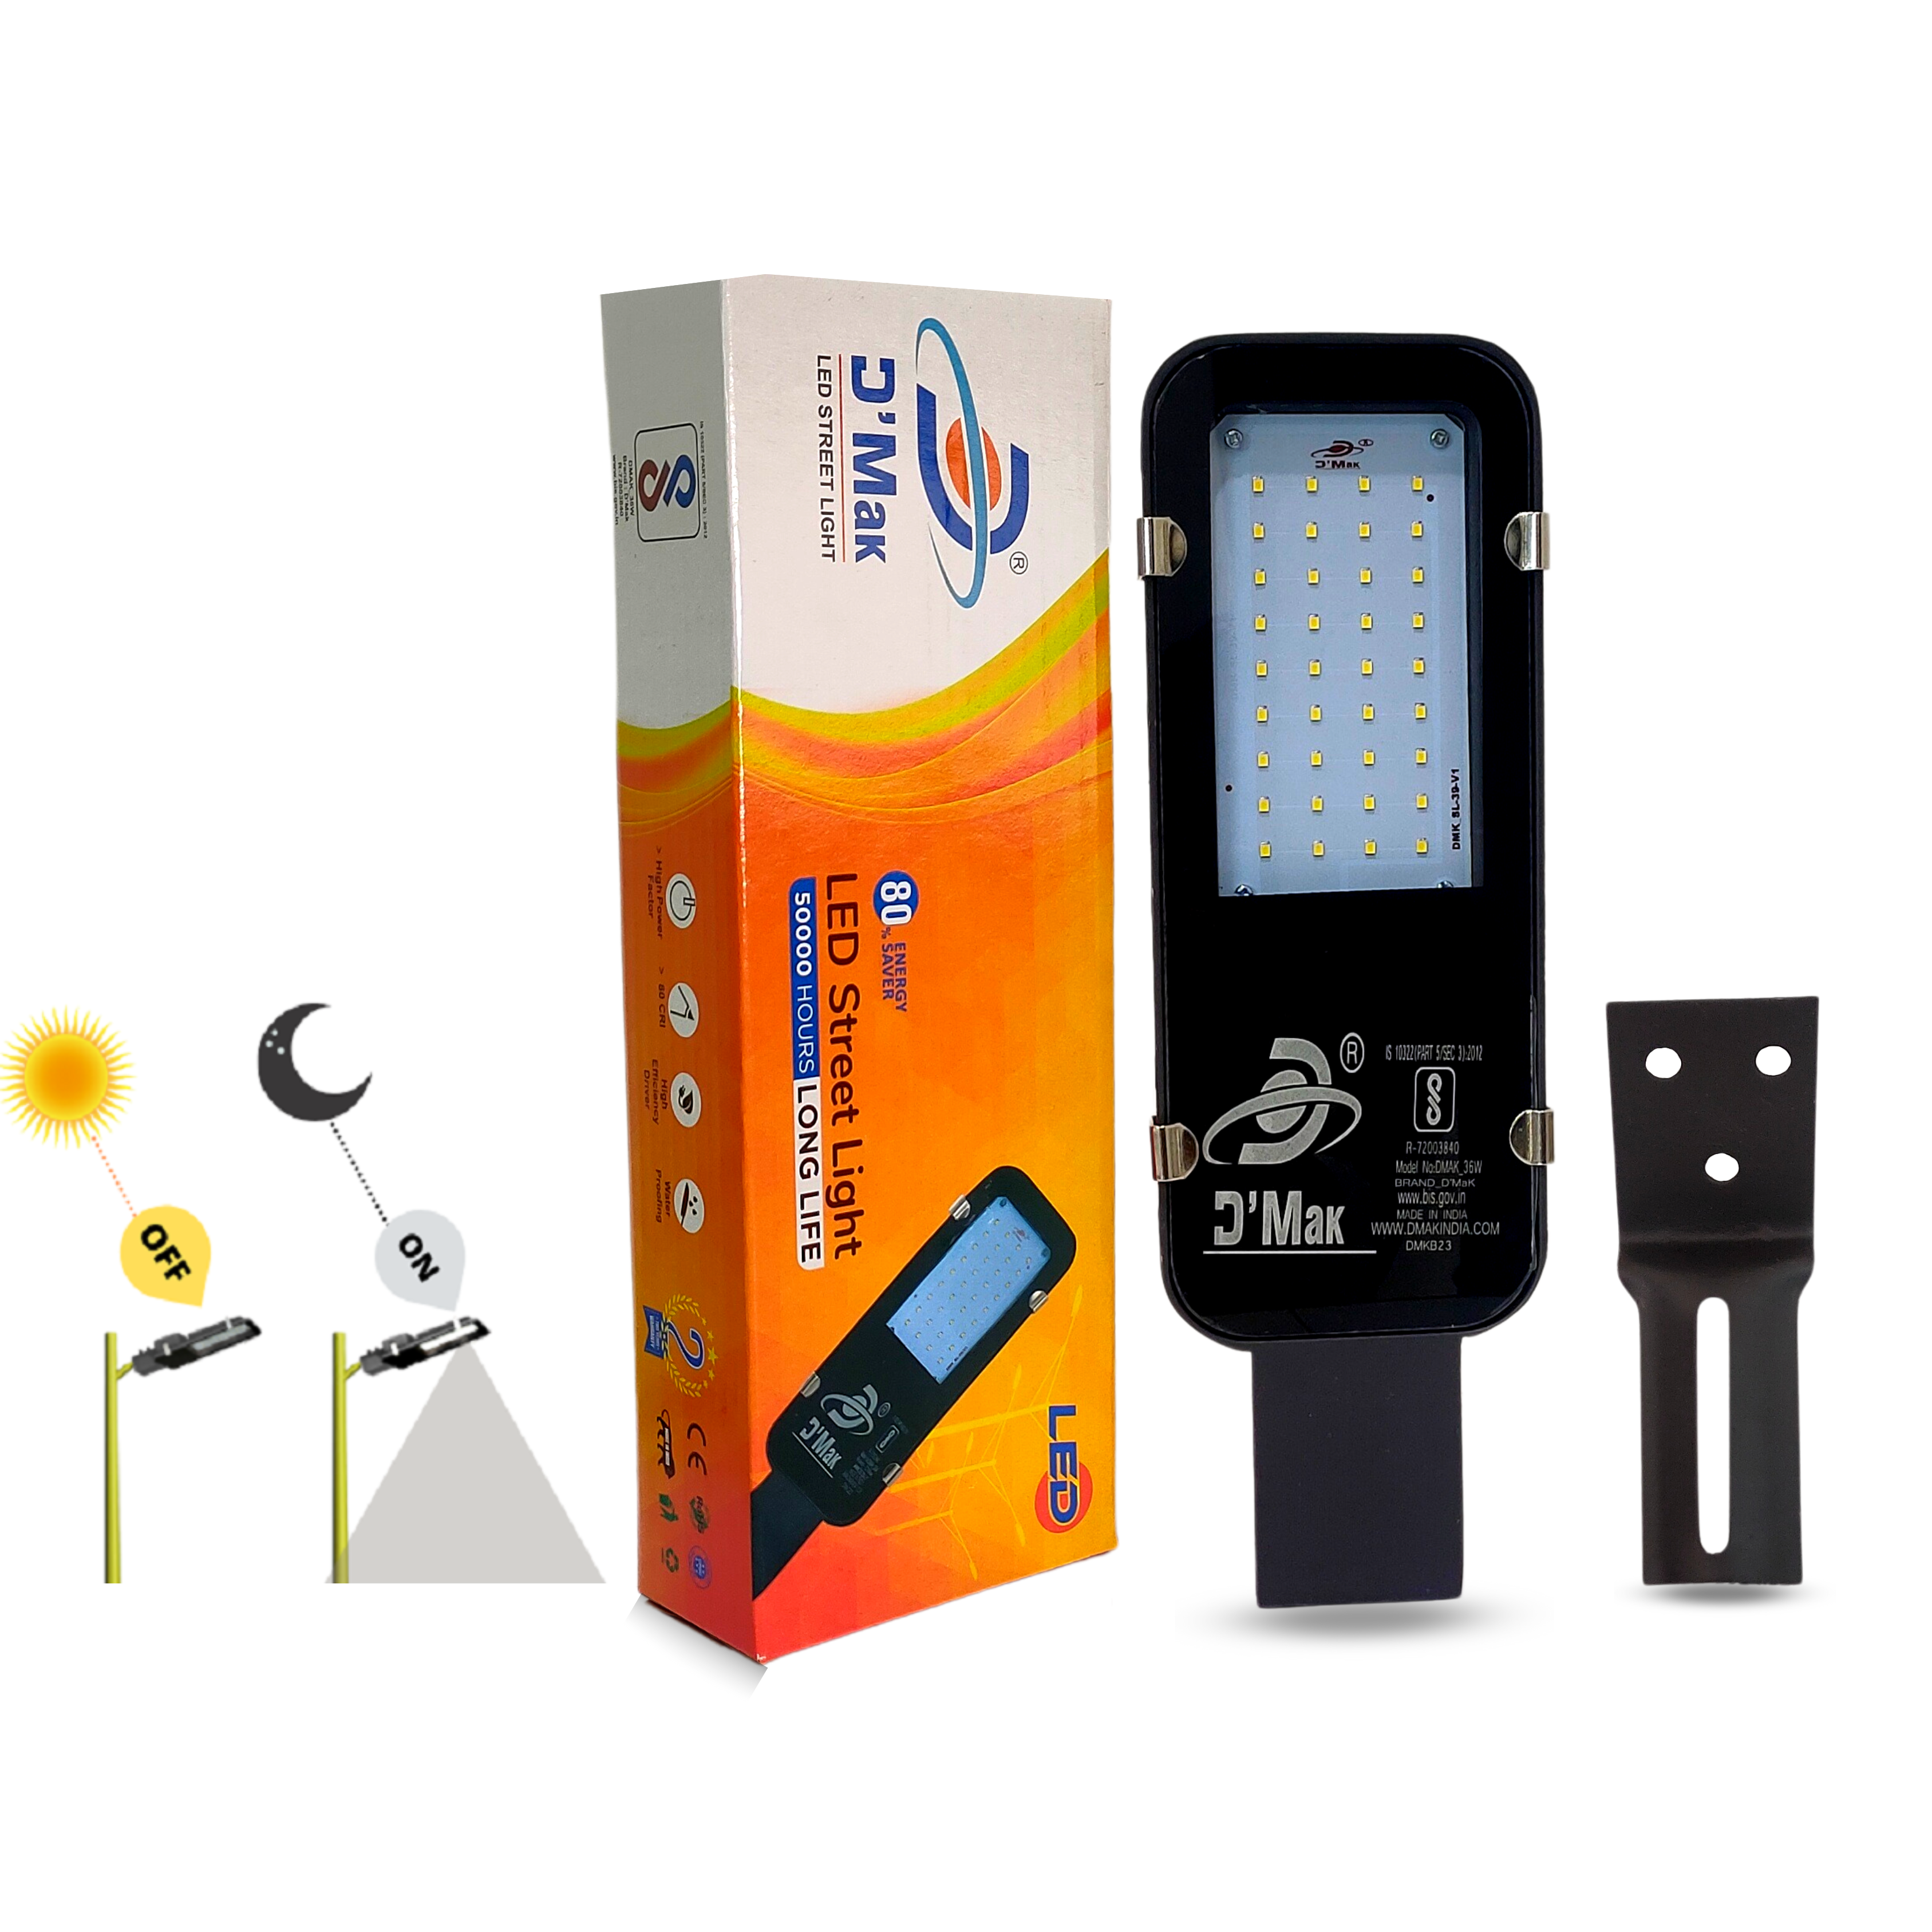 18 Watt Automatic Sensor System LED Street Light Waterproof IP65 for Outdoor Purposes